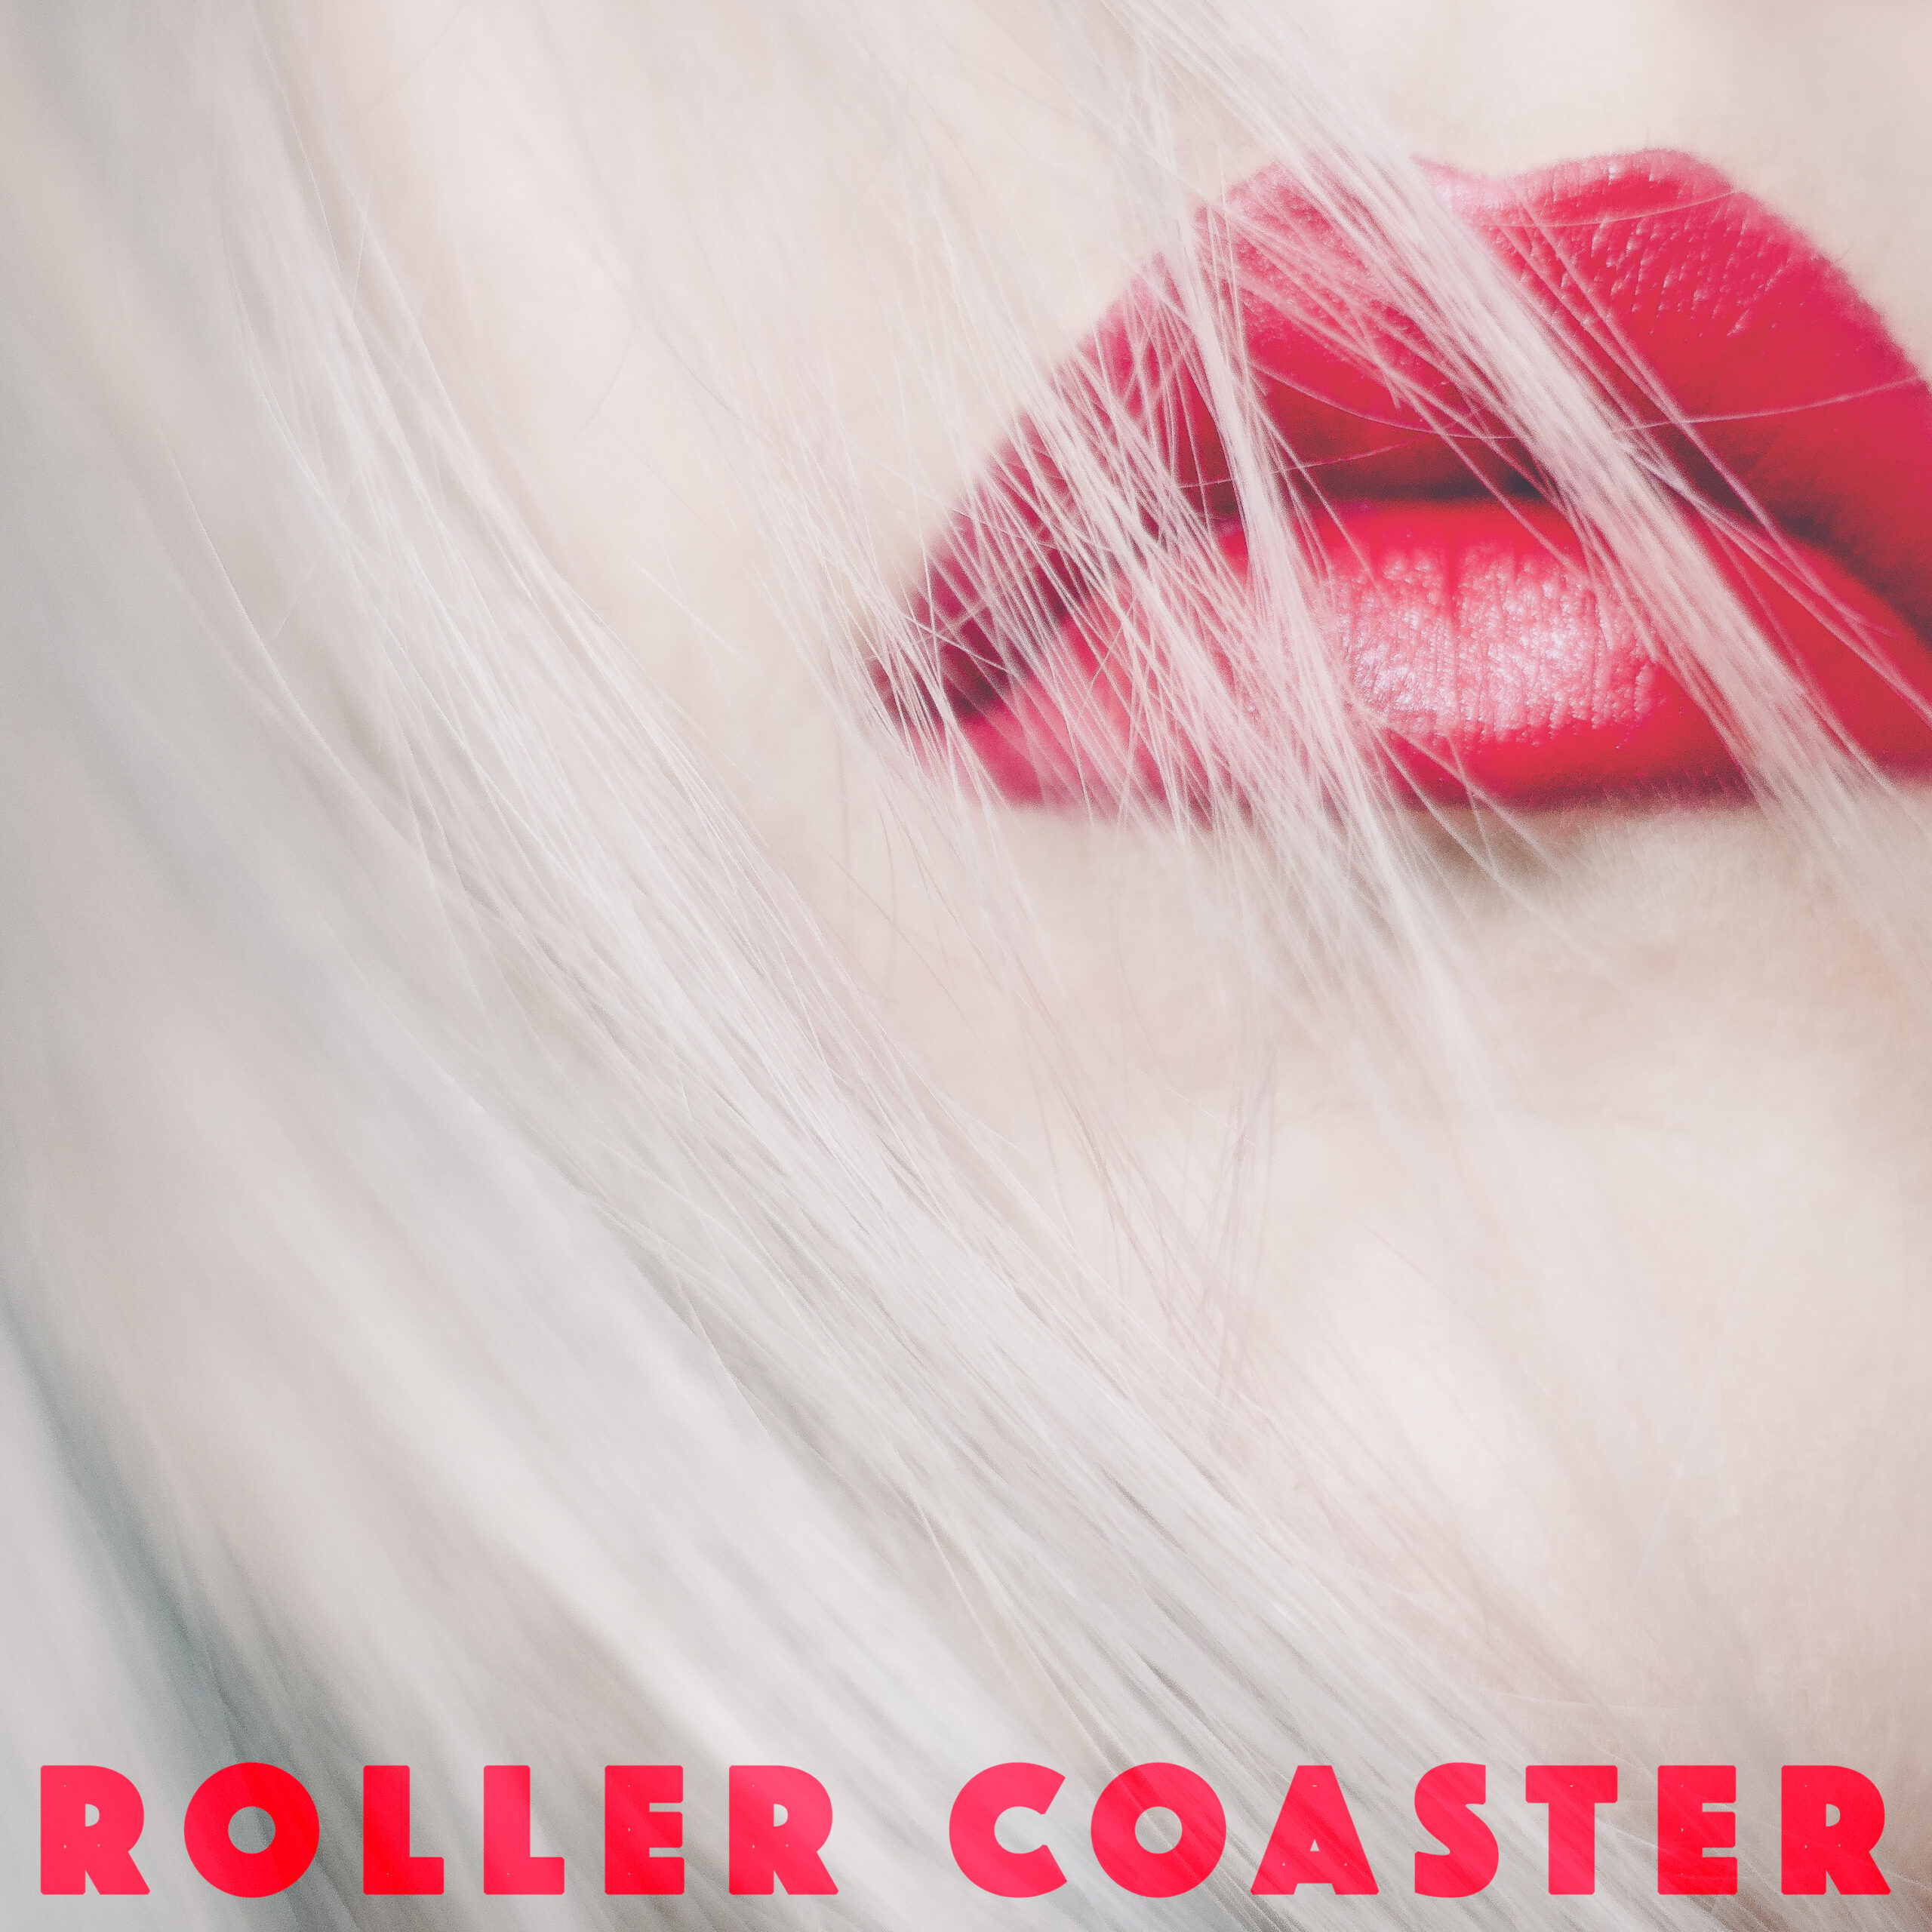 New Single – Roller Coaster